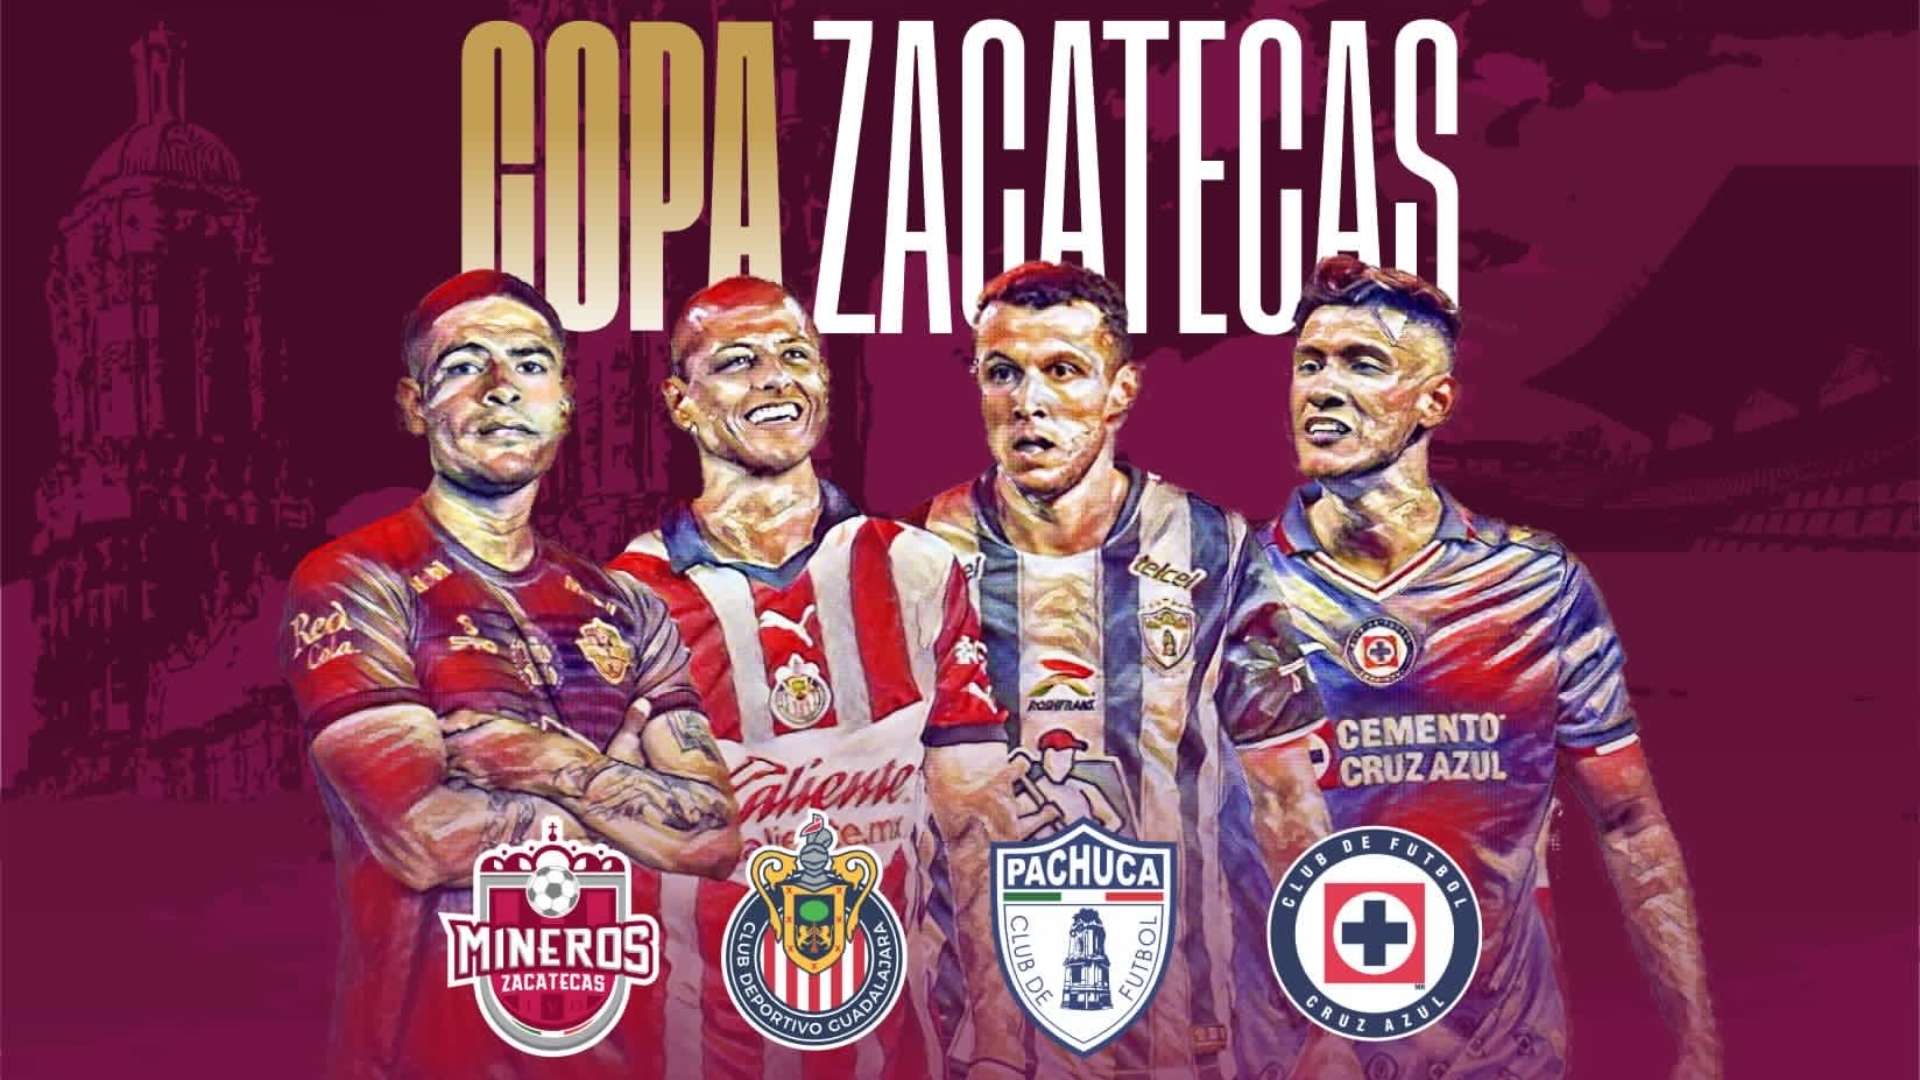 Copa Zacatecas